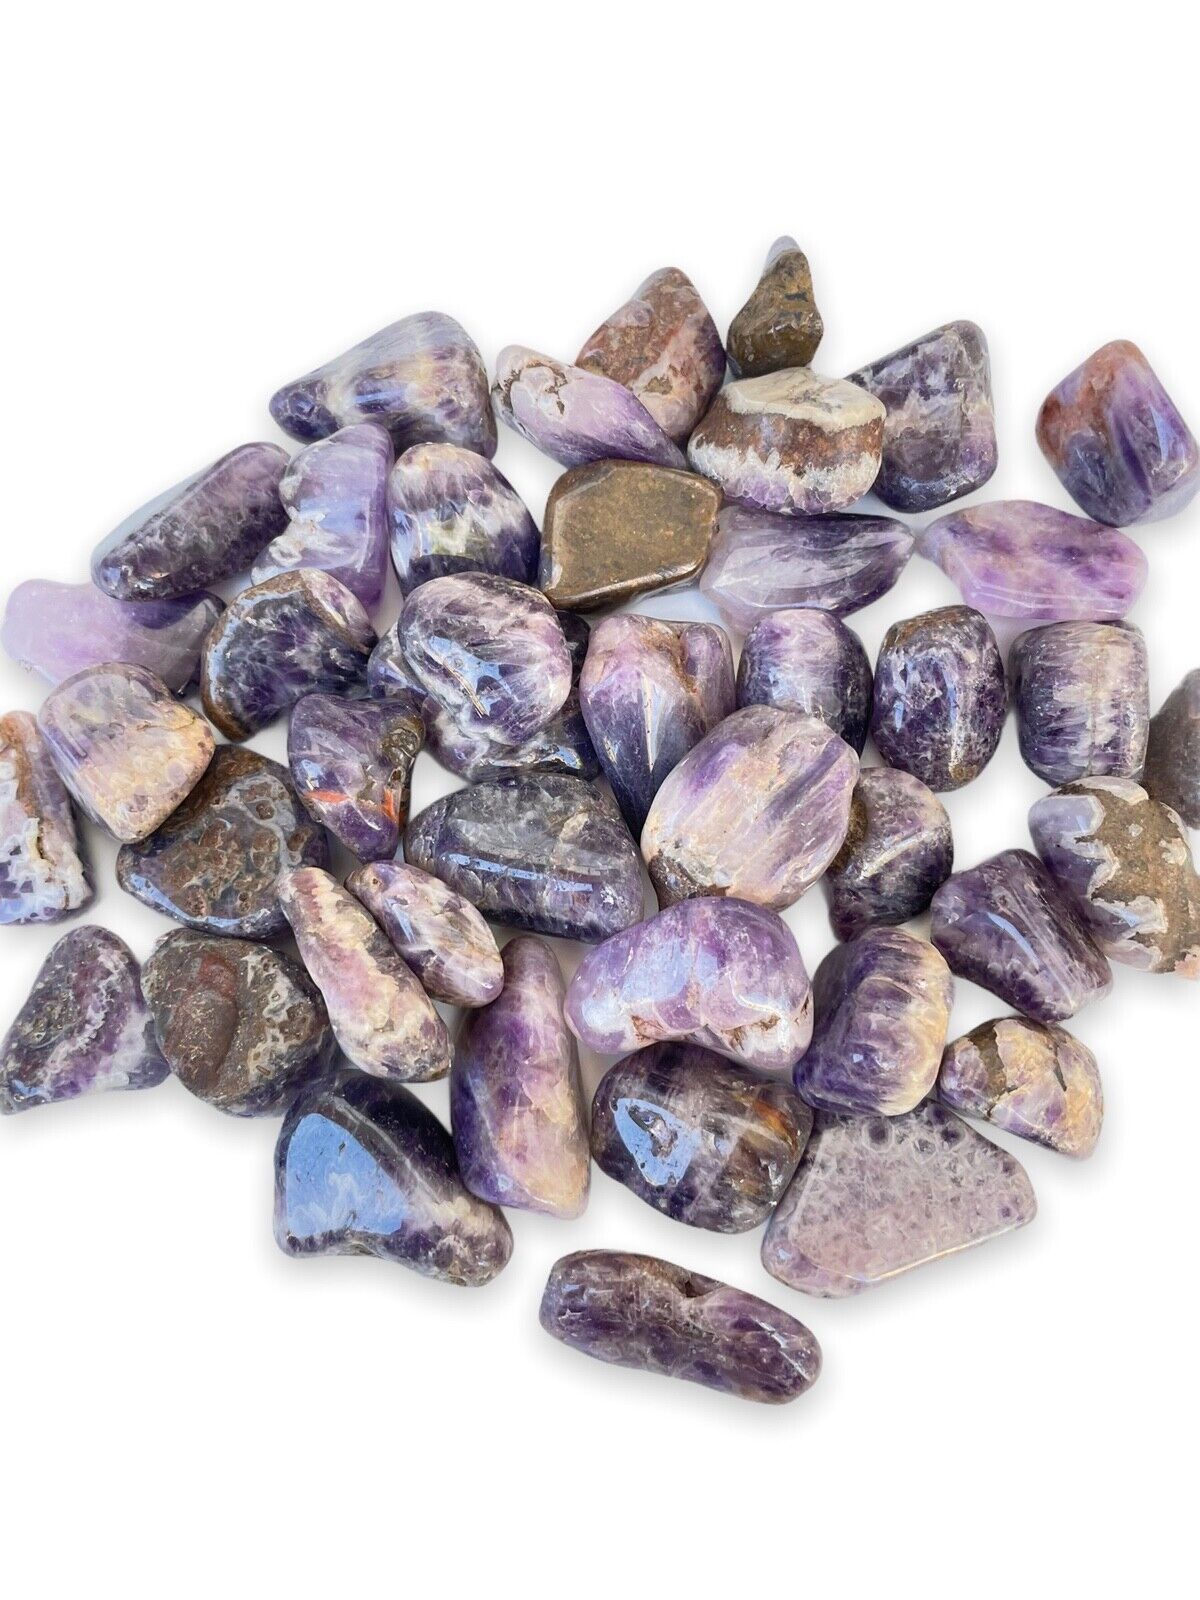 1/2 LB Purple Dream Amethyst 20-30mm Tumbled Stones Healing Crystals Addictions 